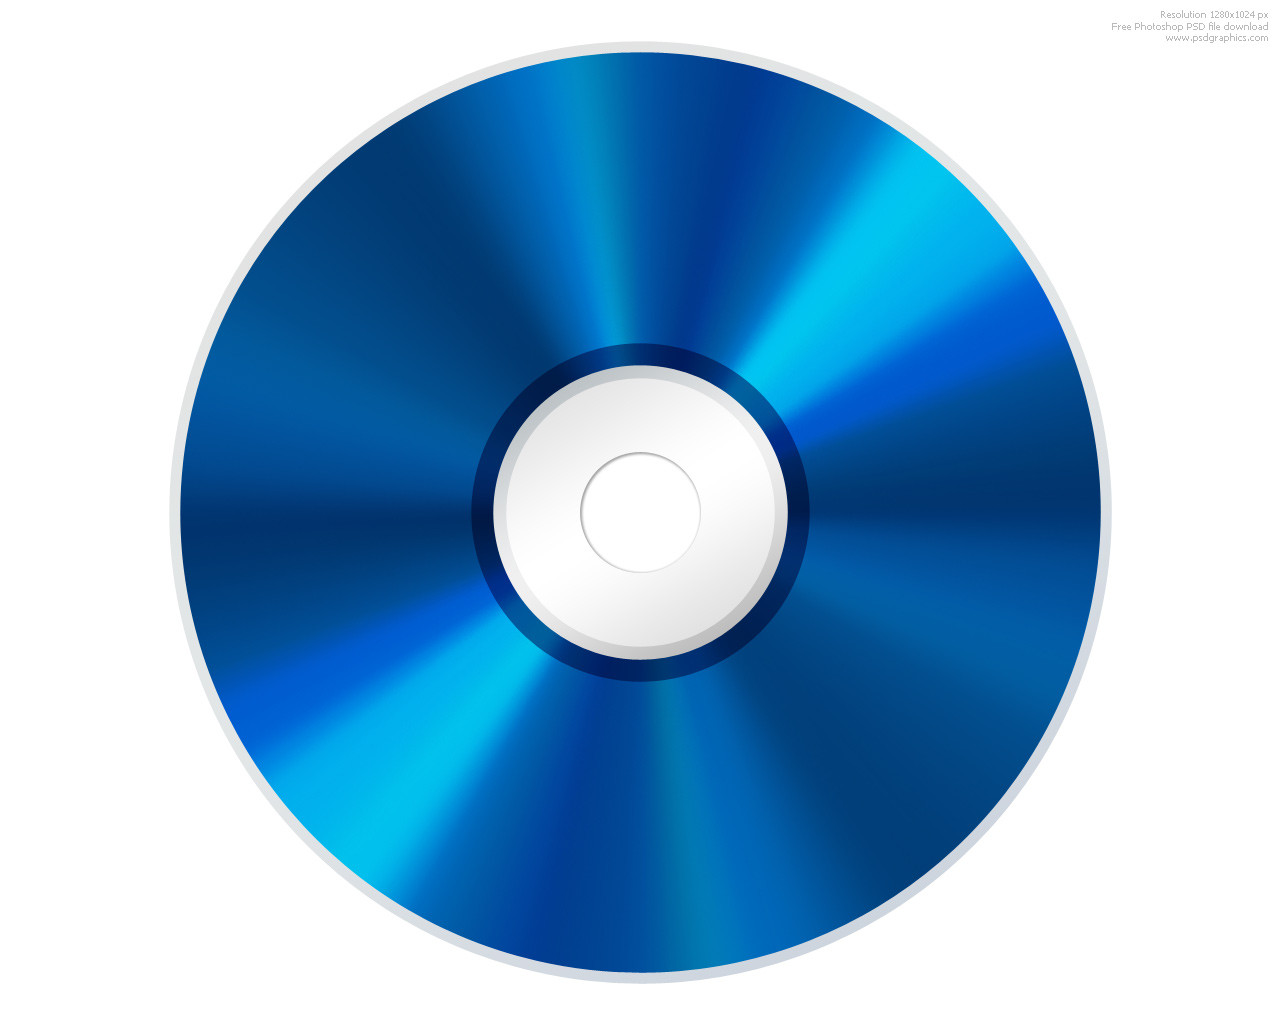 blu-ray-disc-icon-psd.jpg